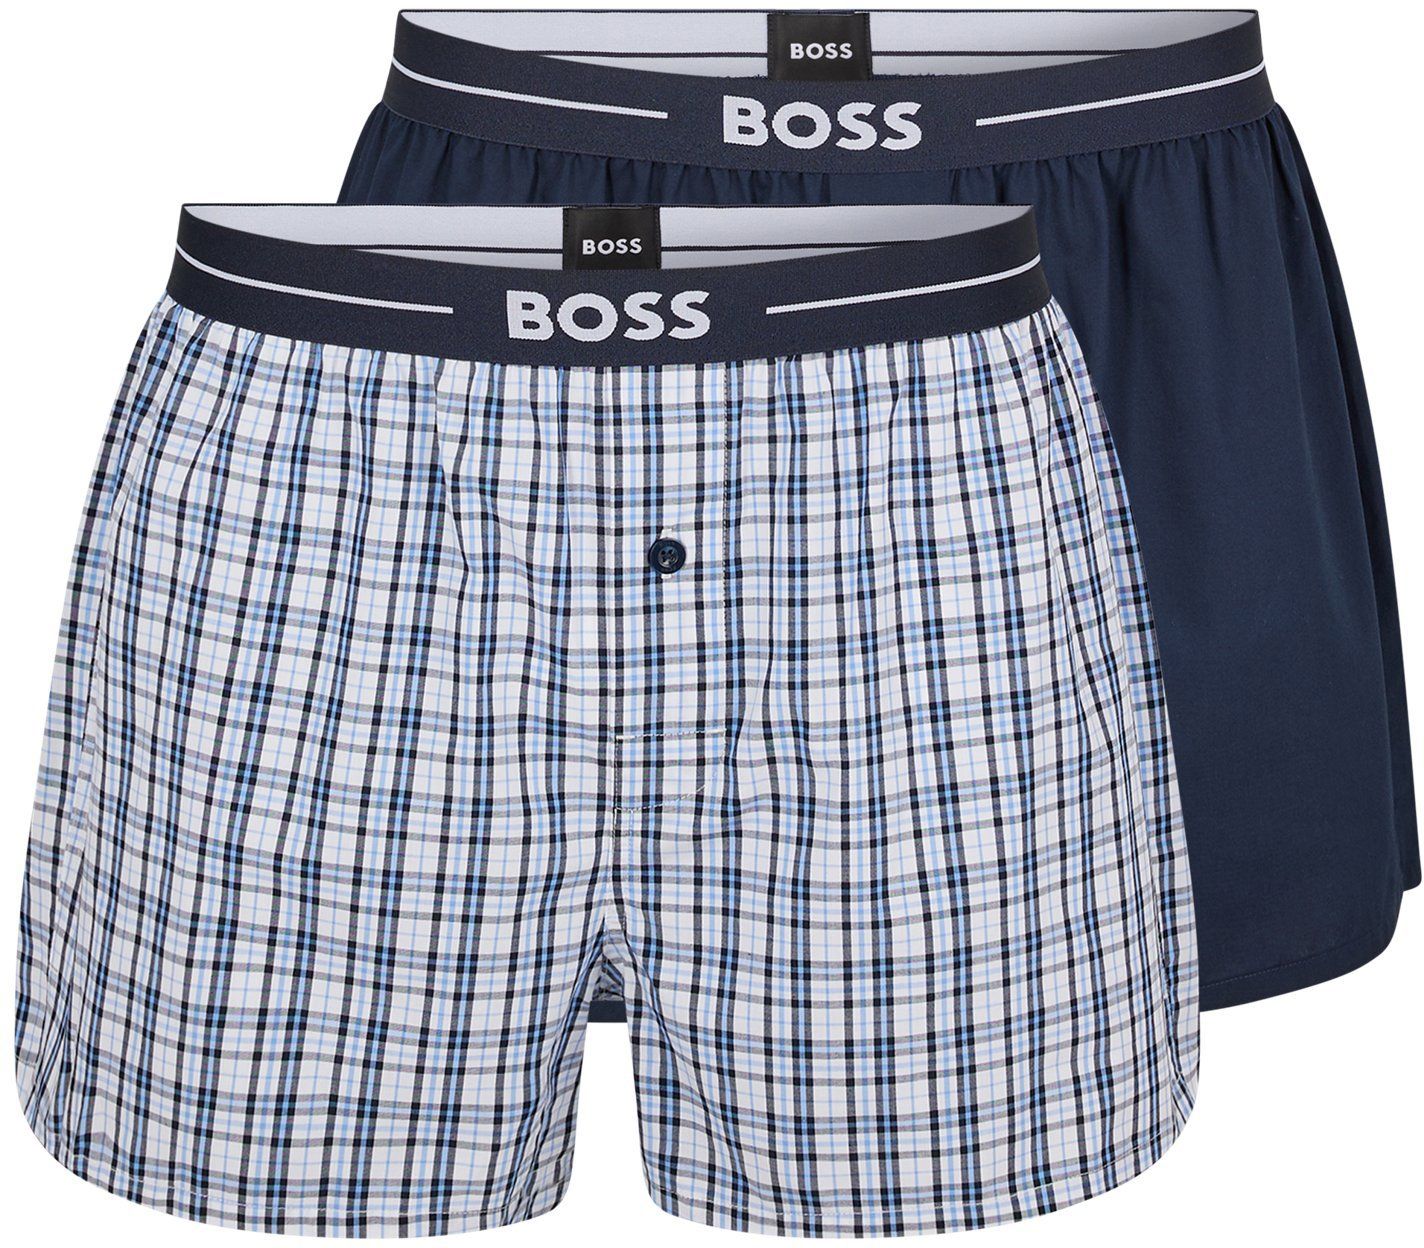 Hugo Boss Boxer Shorts 2-Pack Navy Blue Dark Blue size L